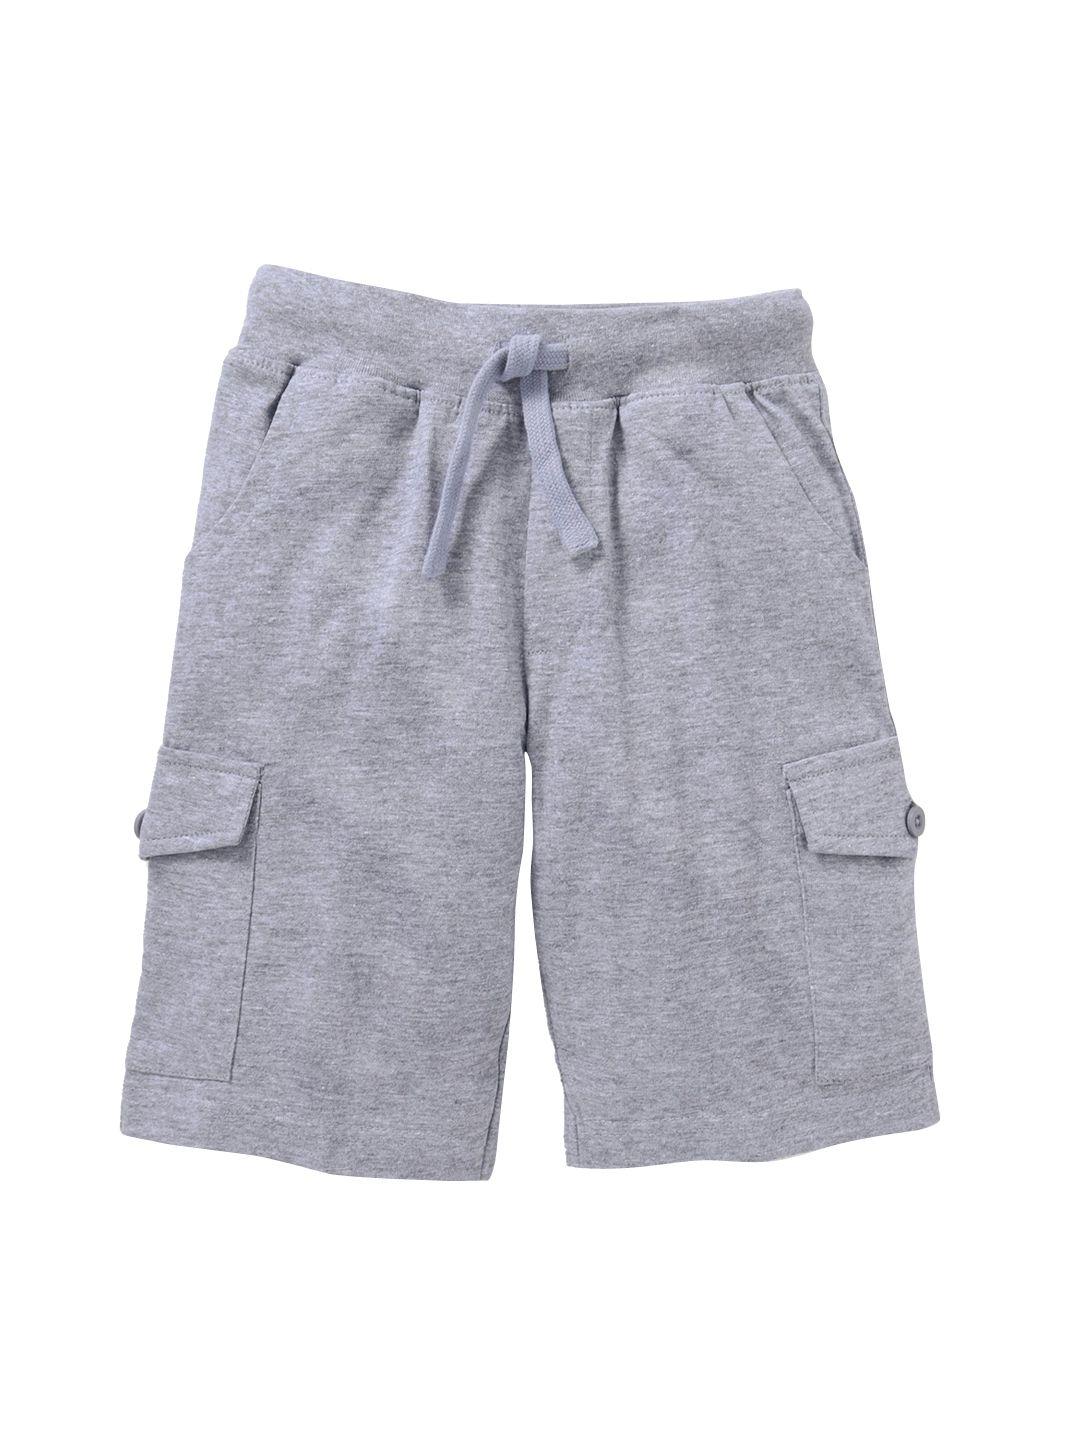 kiddopanti-boys-cotton-high-rise-shorts